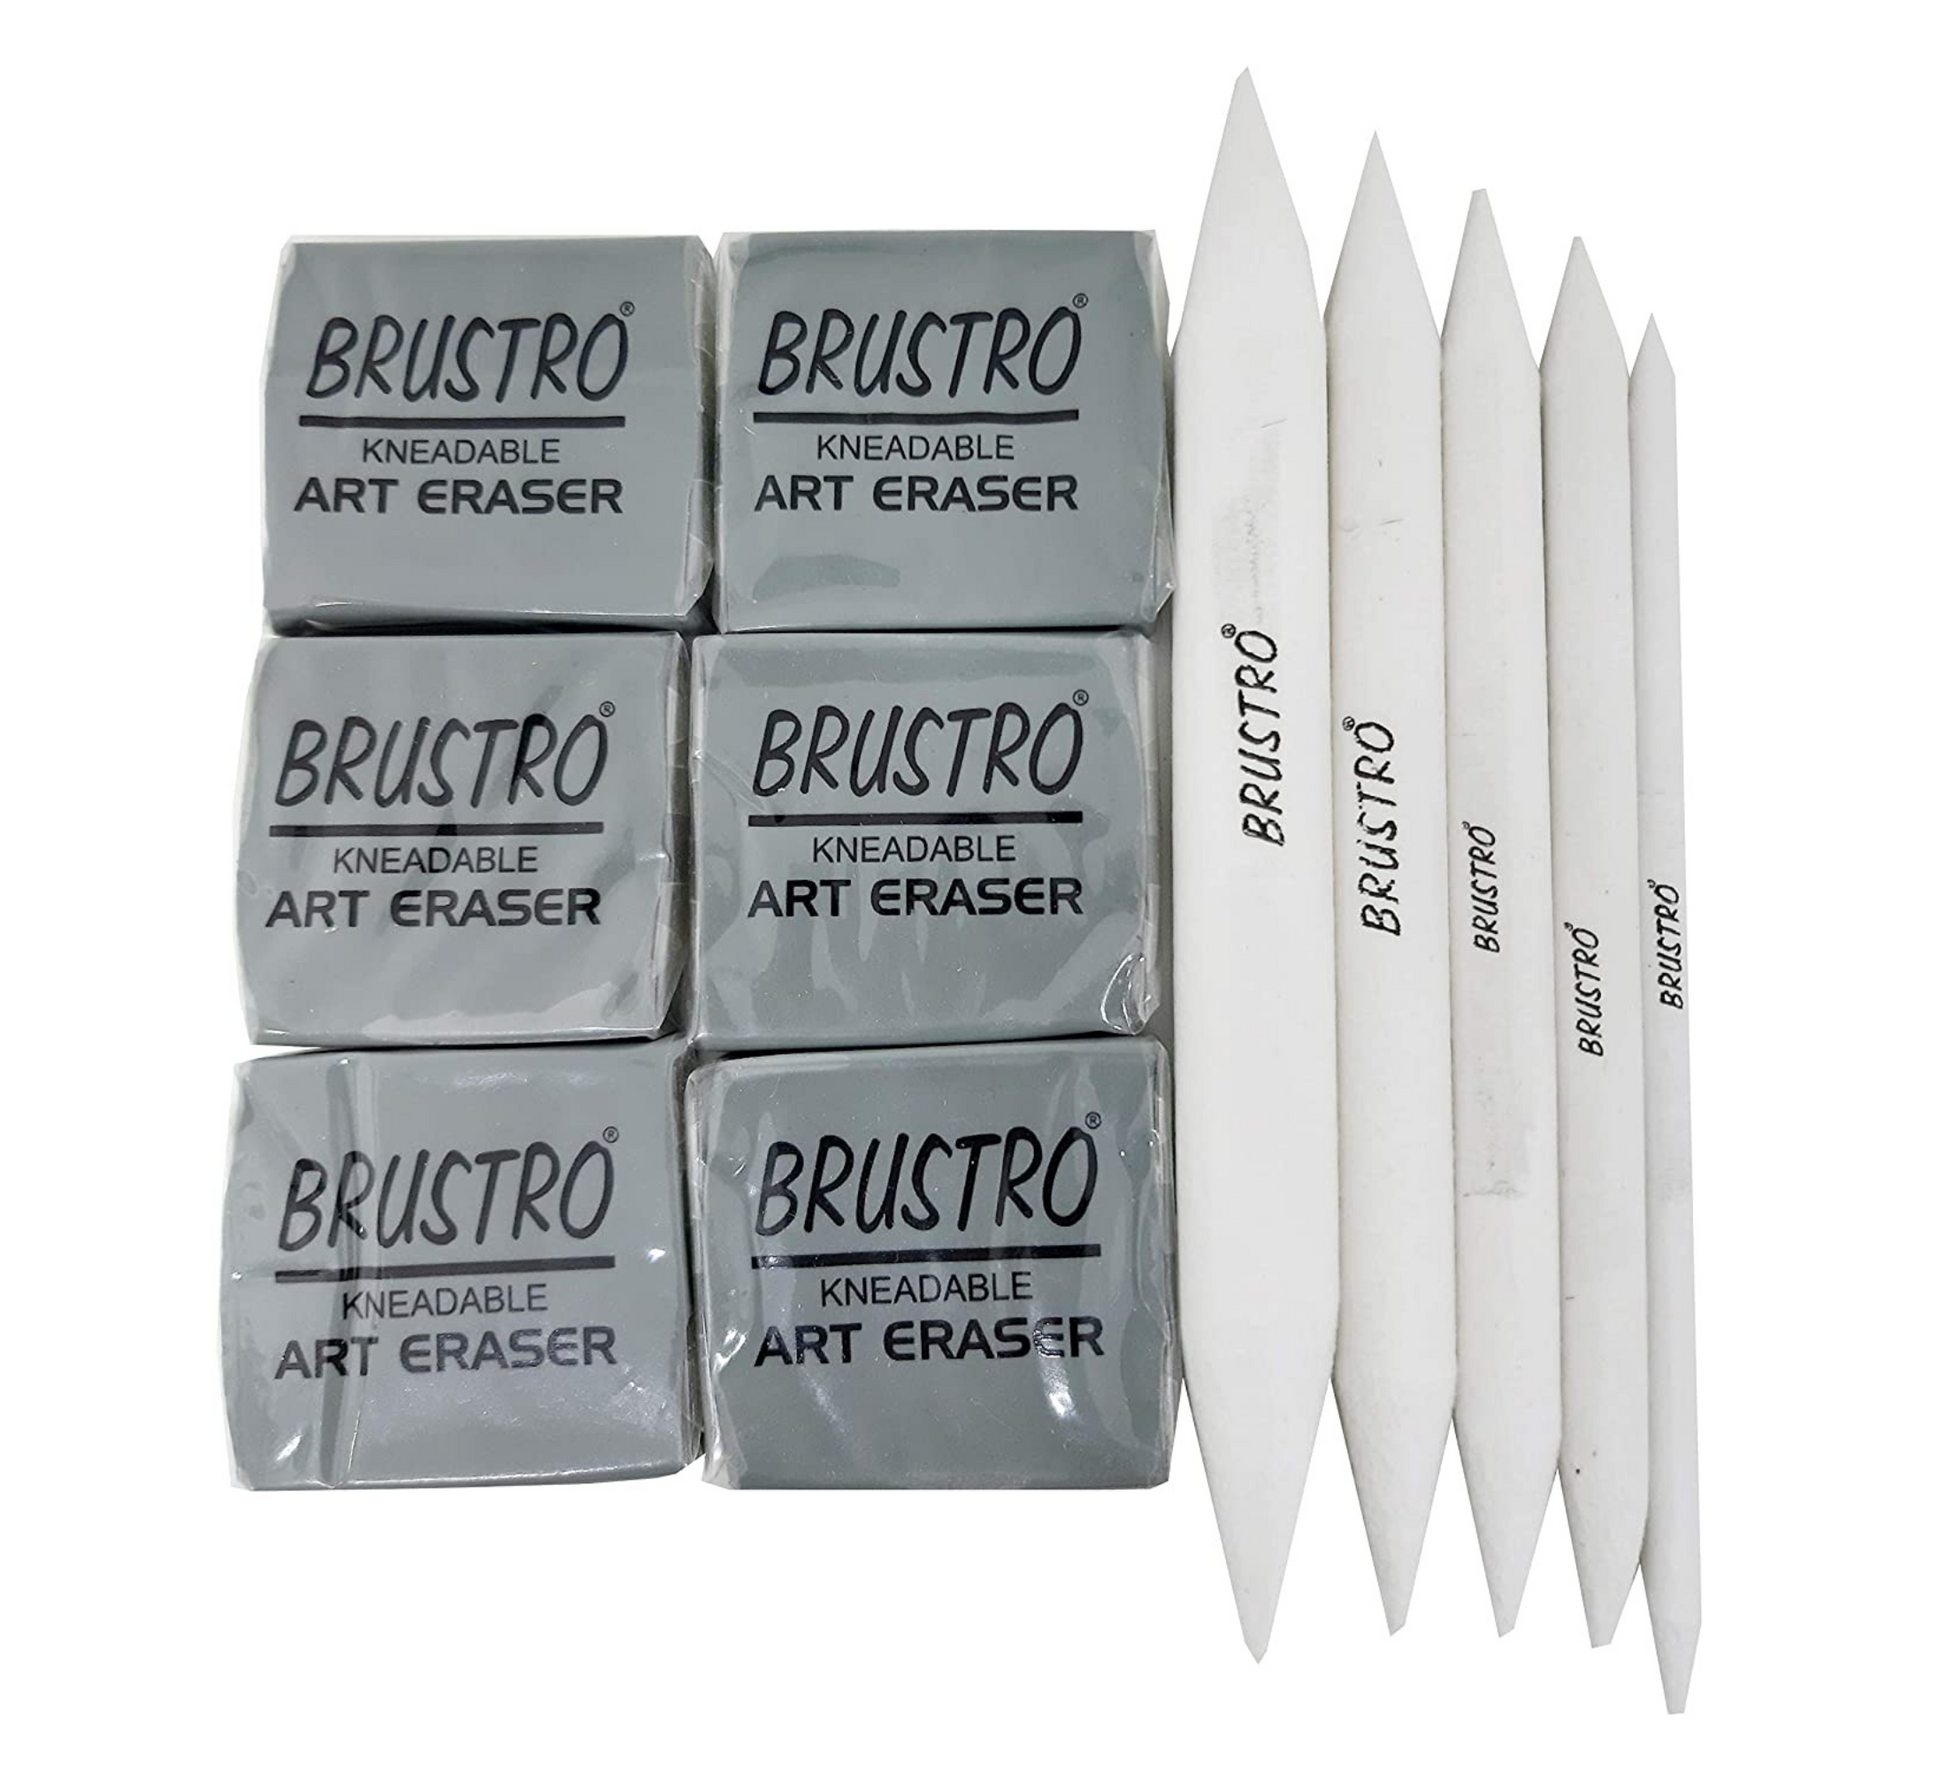 BRUSTRO kneadable Art Eraser Pack of 6 with Blending Stump Set